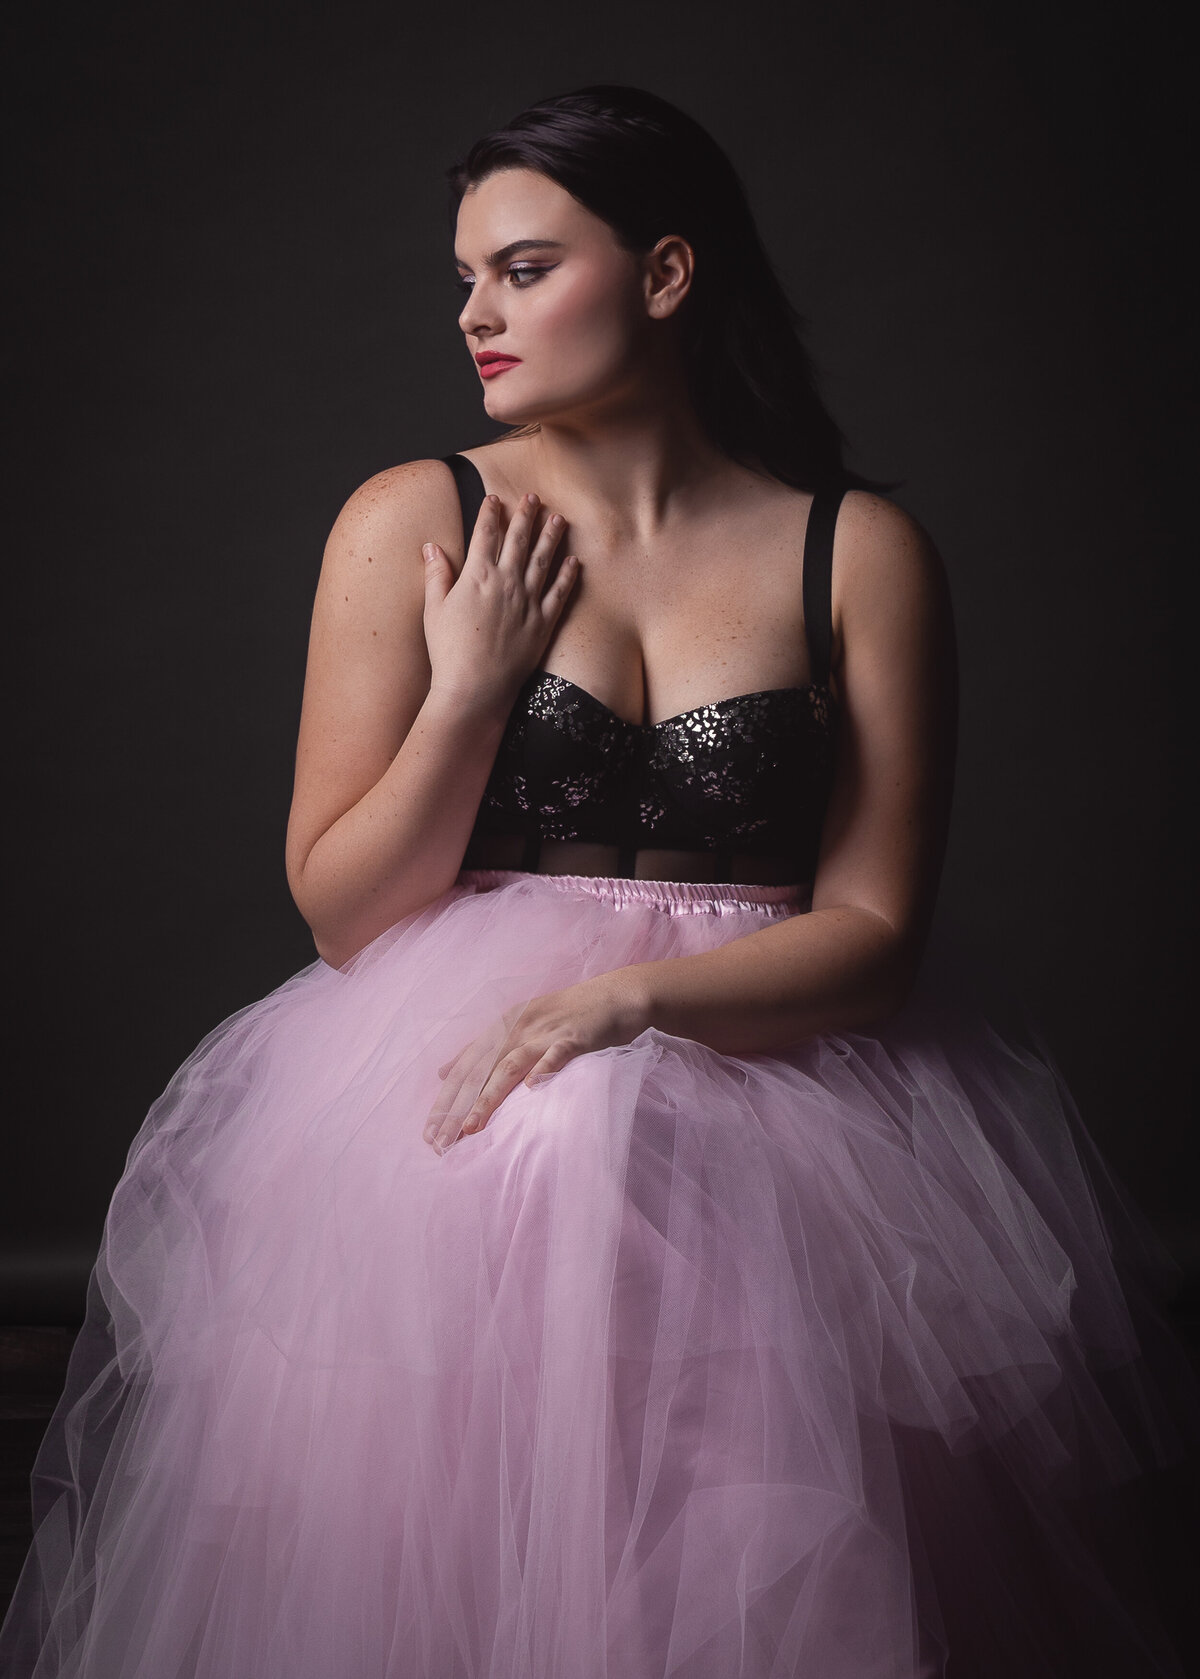 woman in pink flowing dress looking sideways